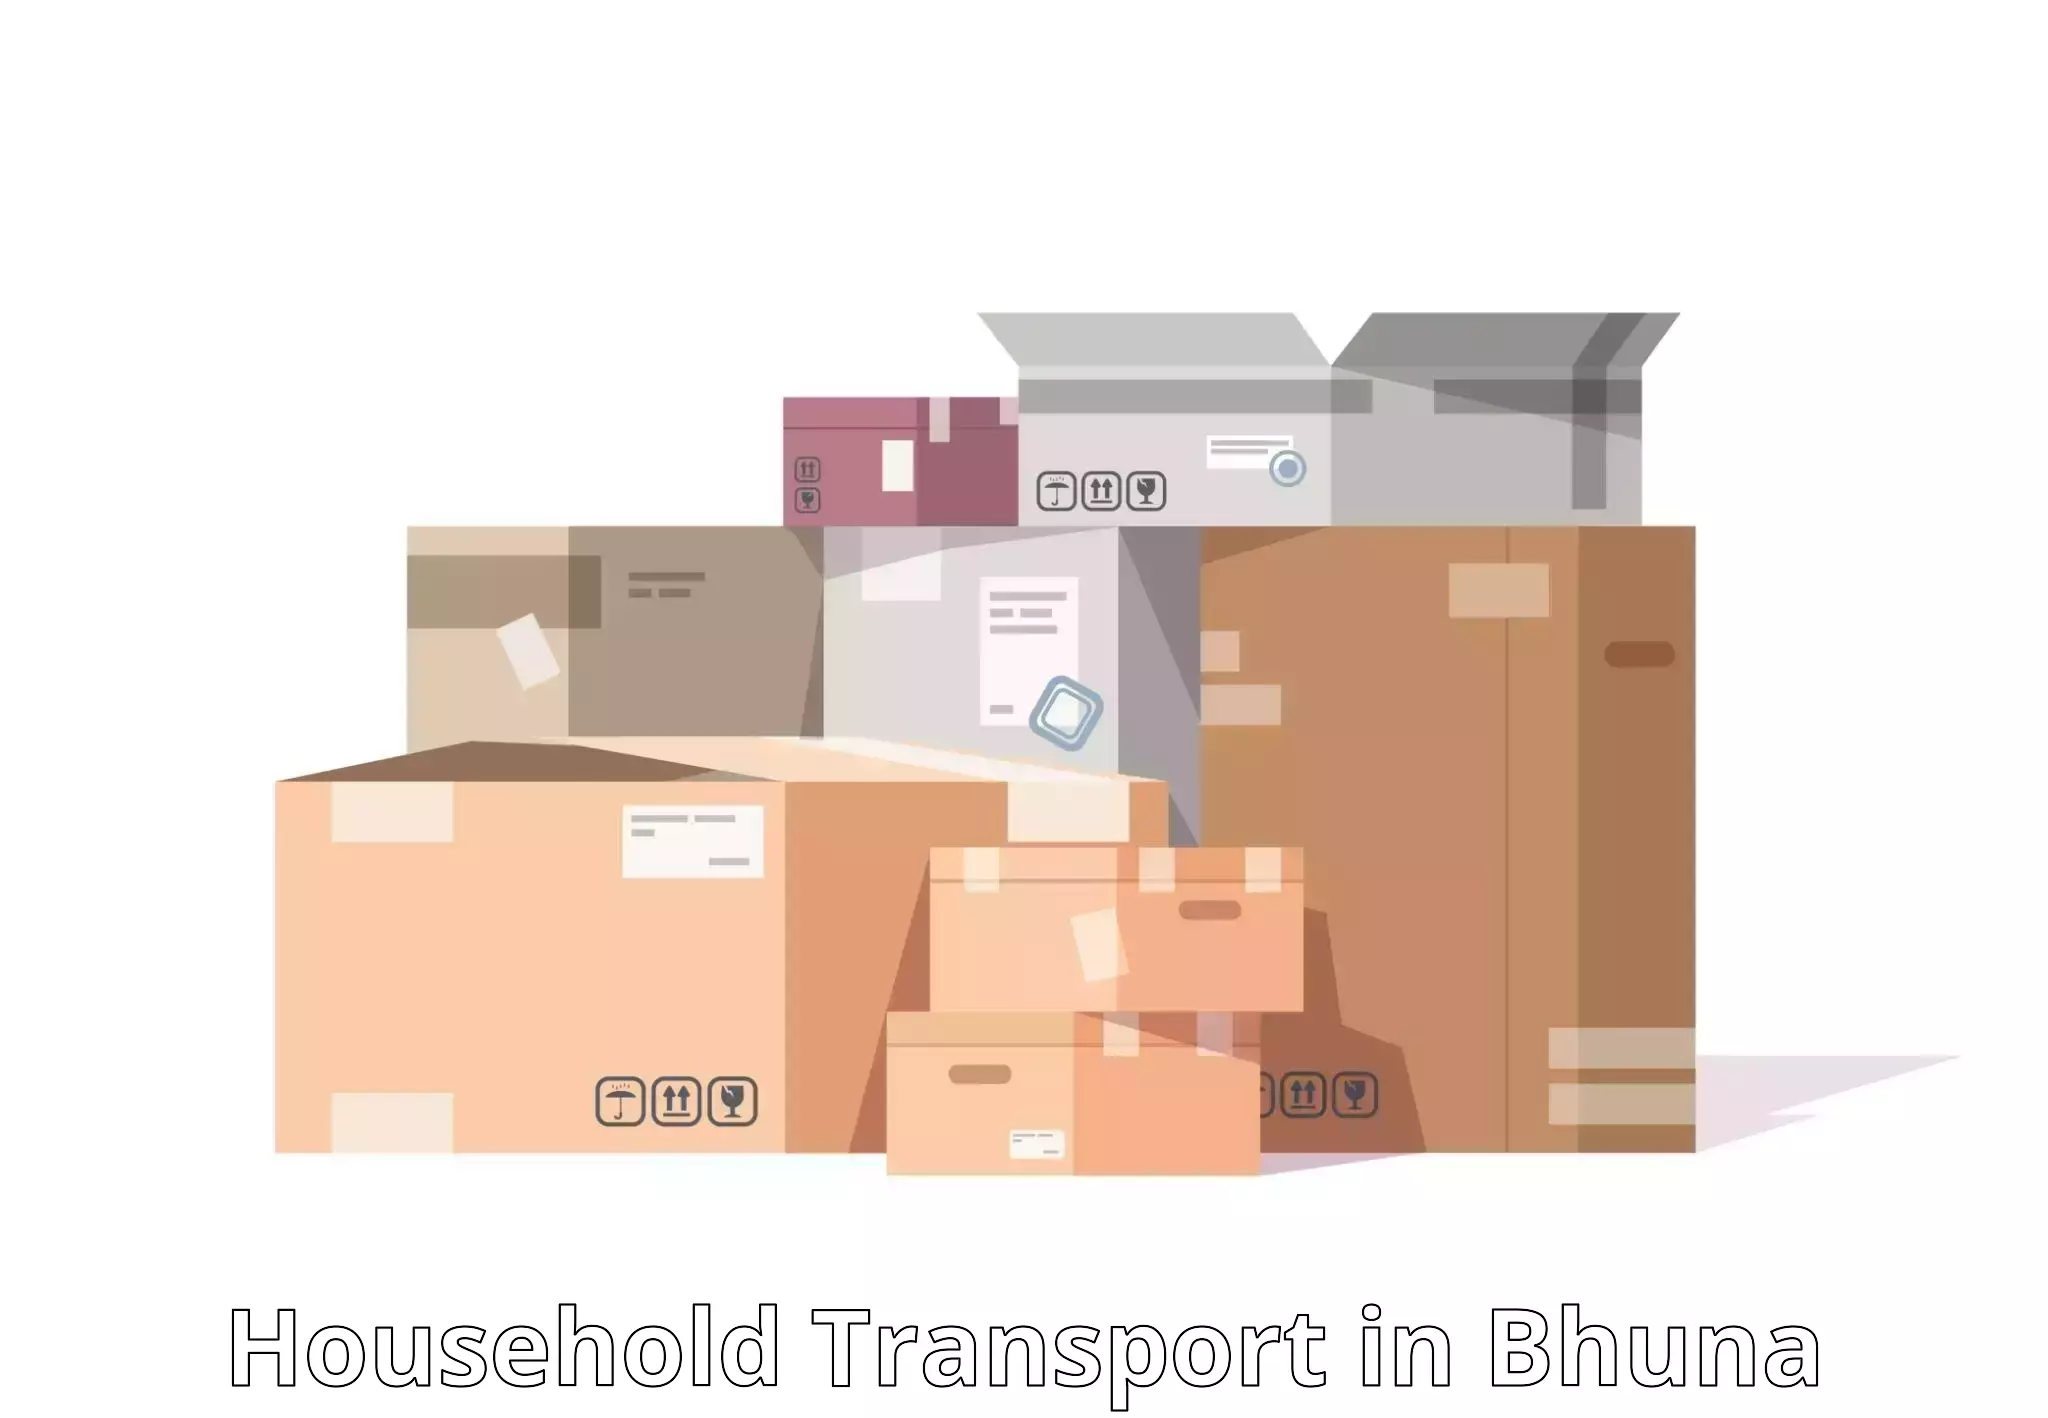 Household goods transporters in Bhuna